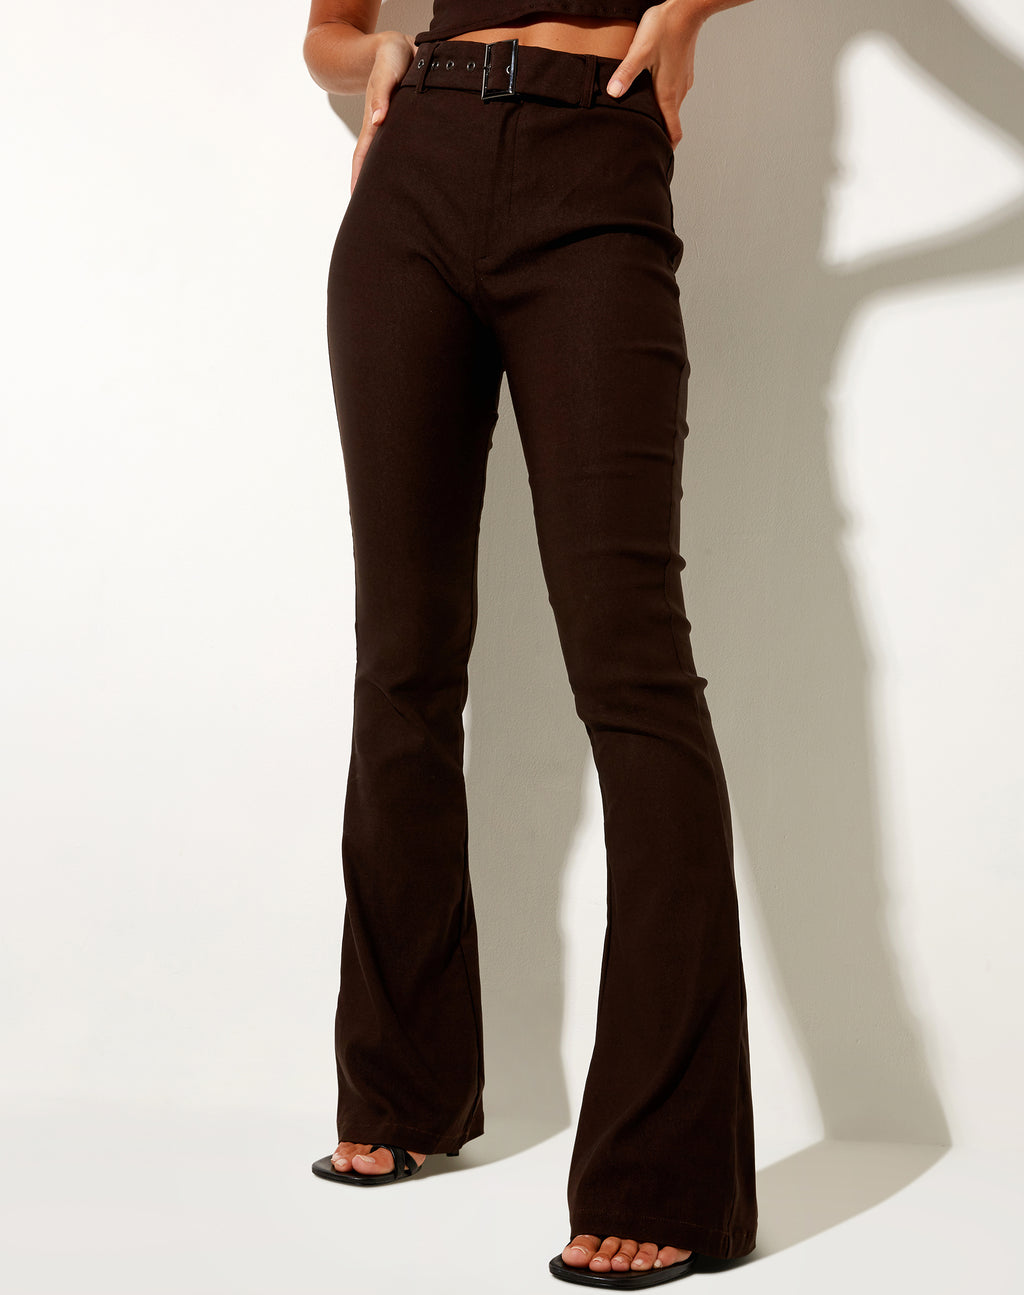 Zaltana Flare Trouser in Tailoring Brown